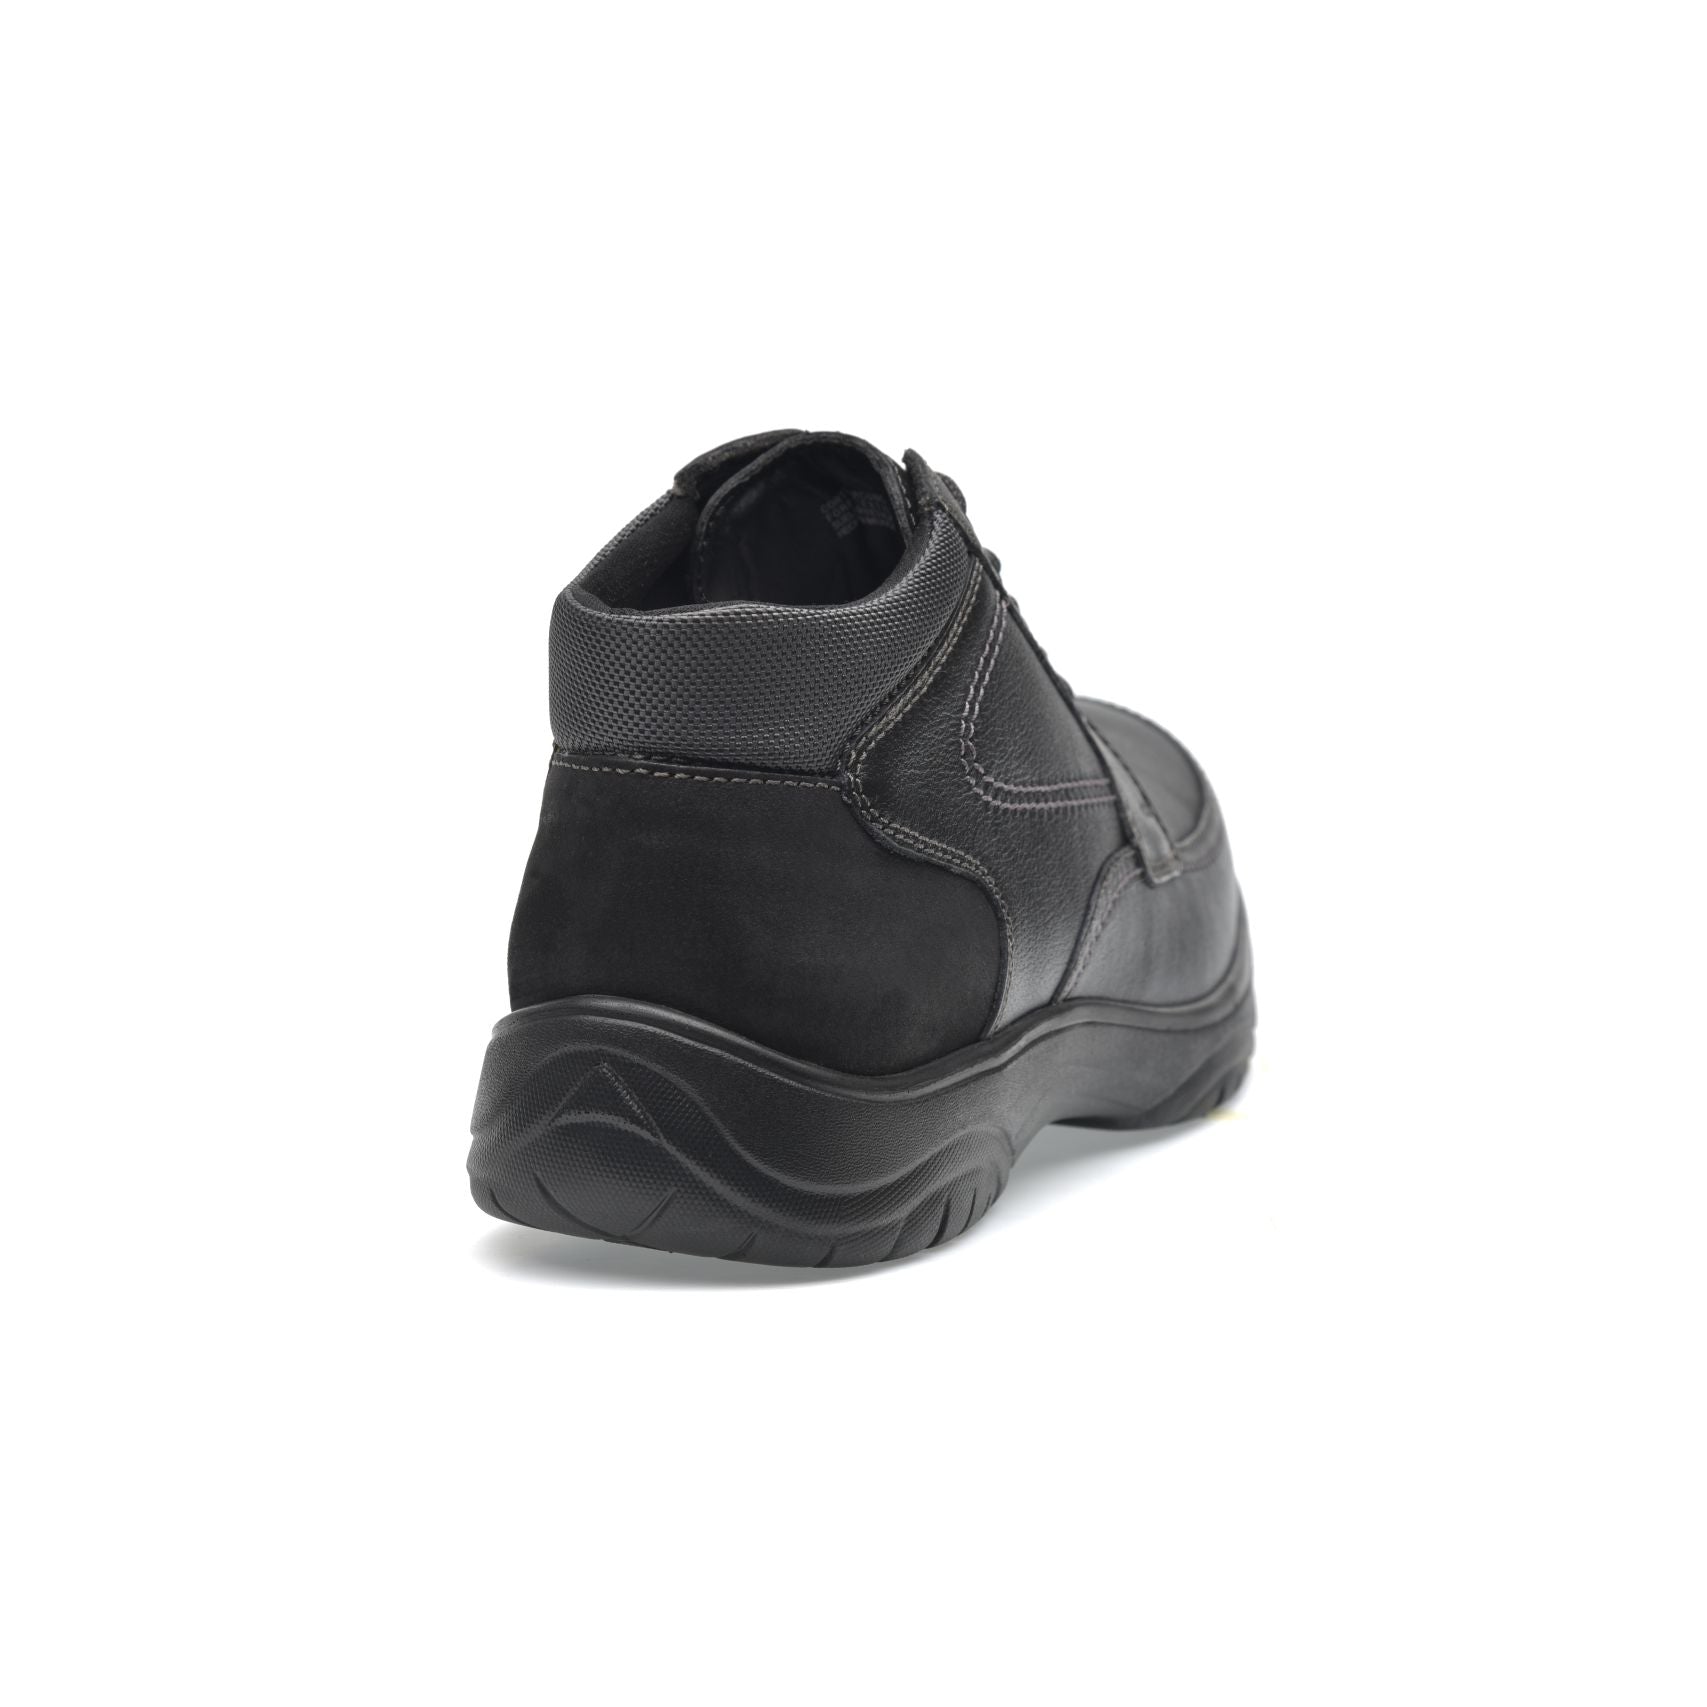 Premium comfort boots for men leather pazstor